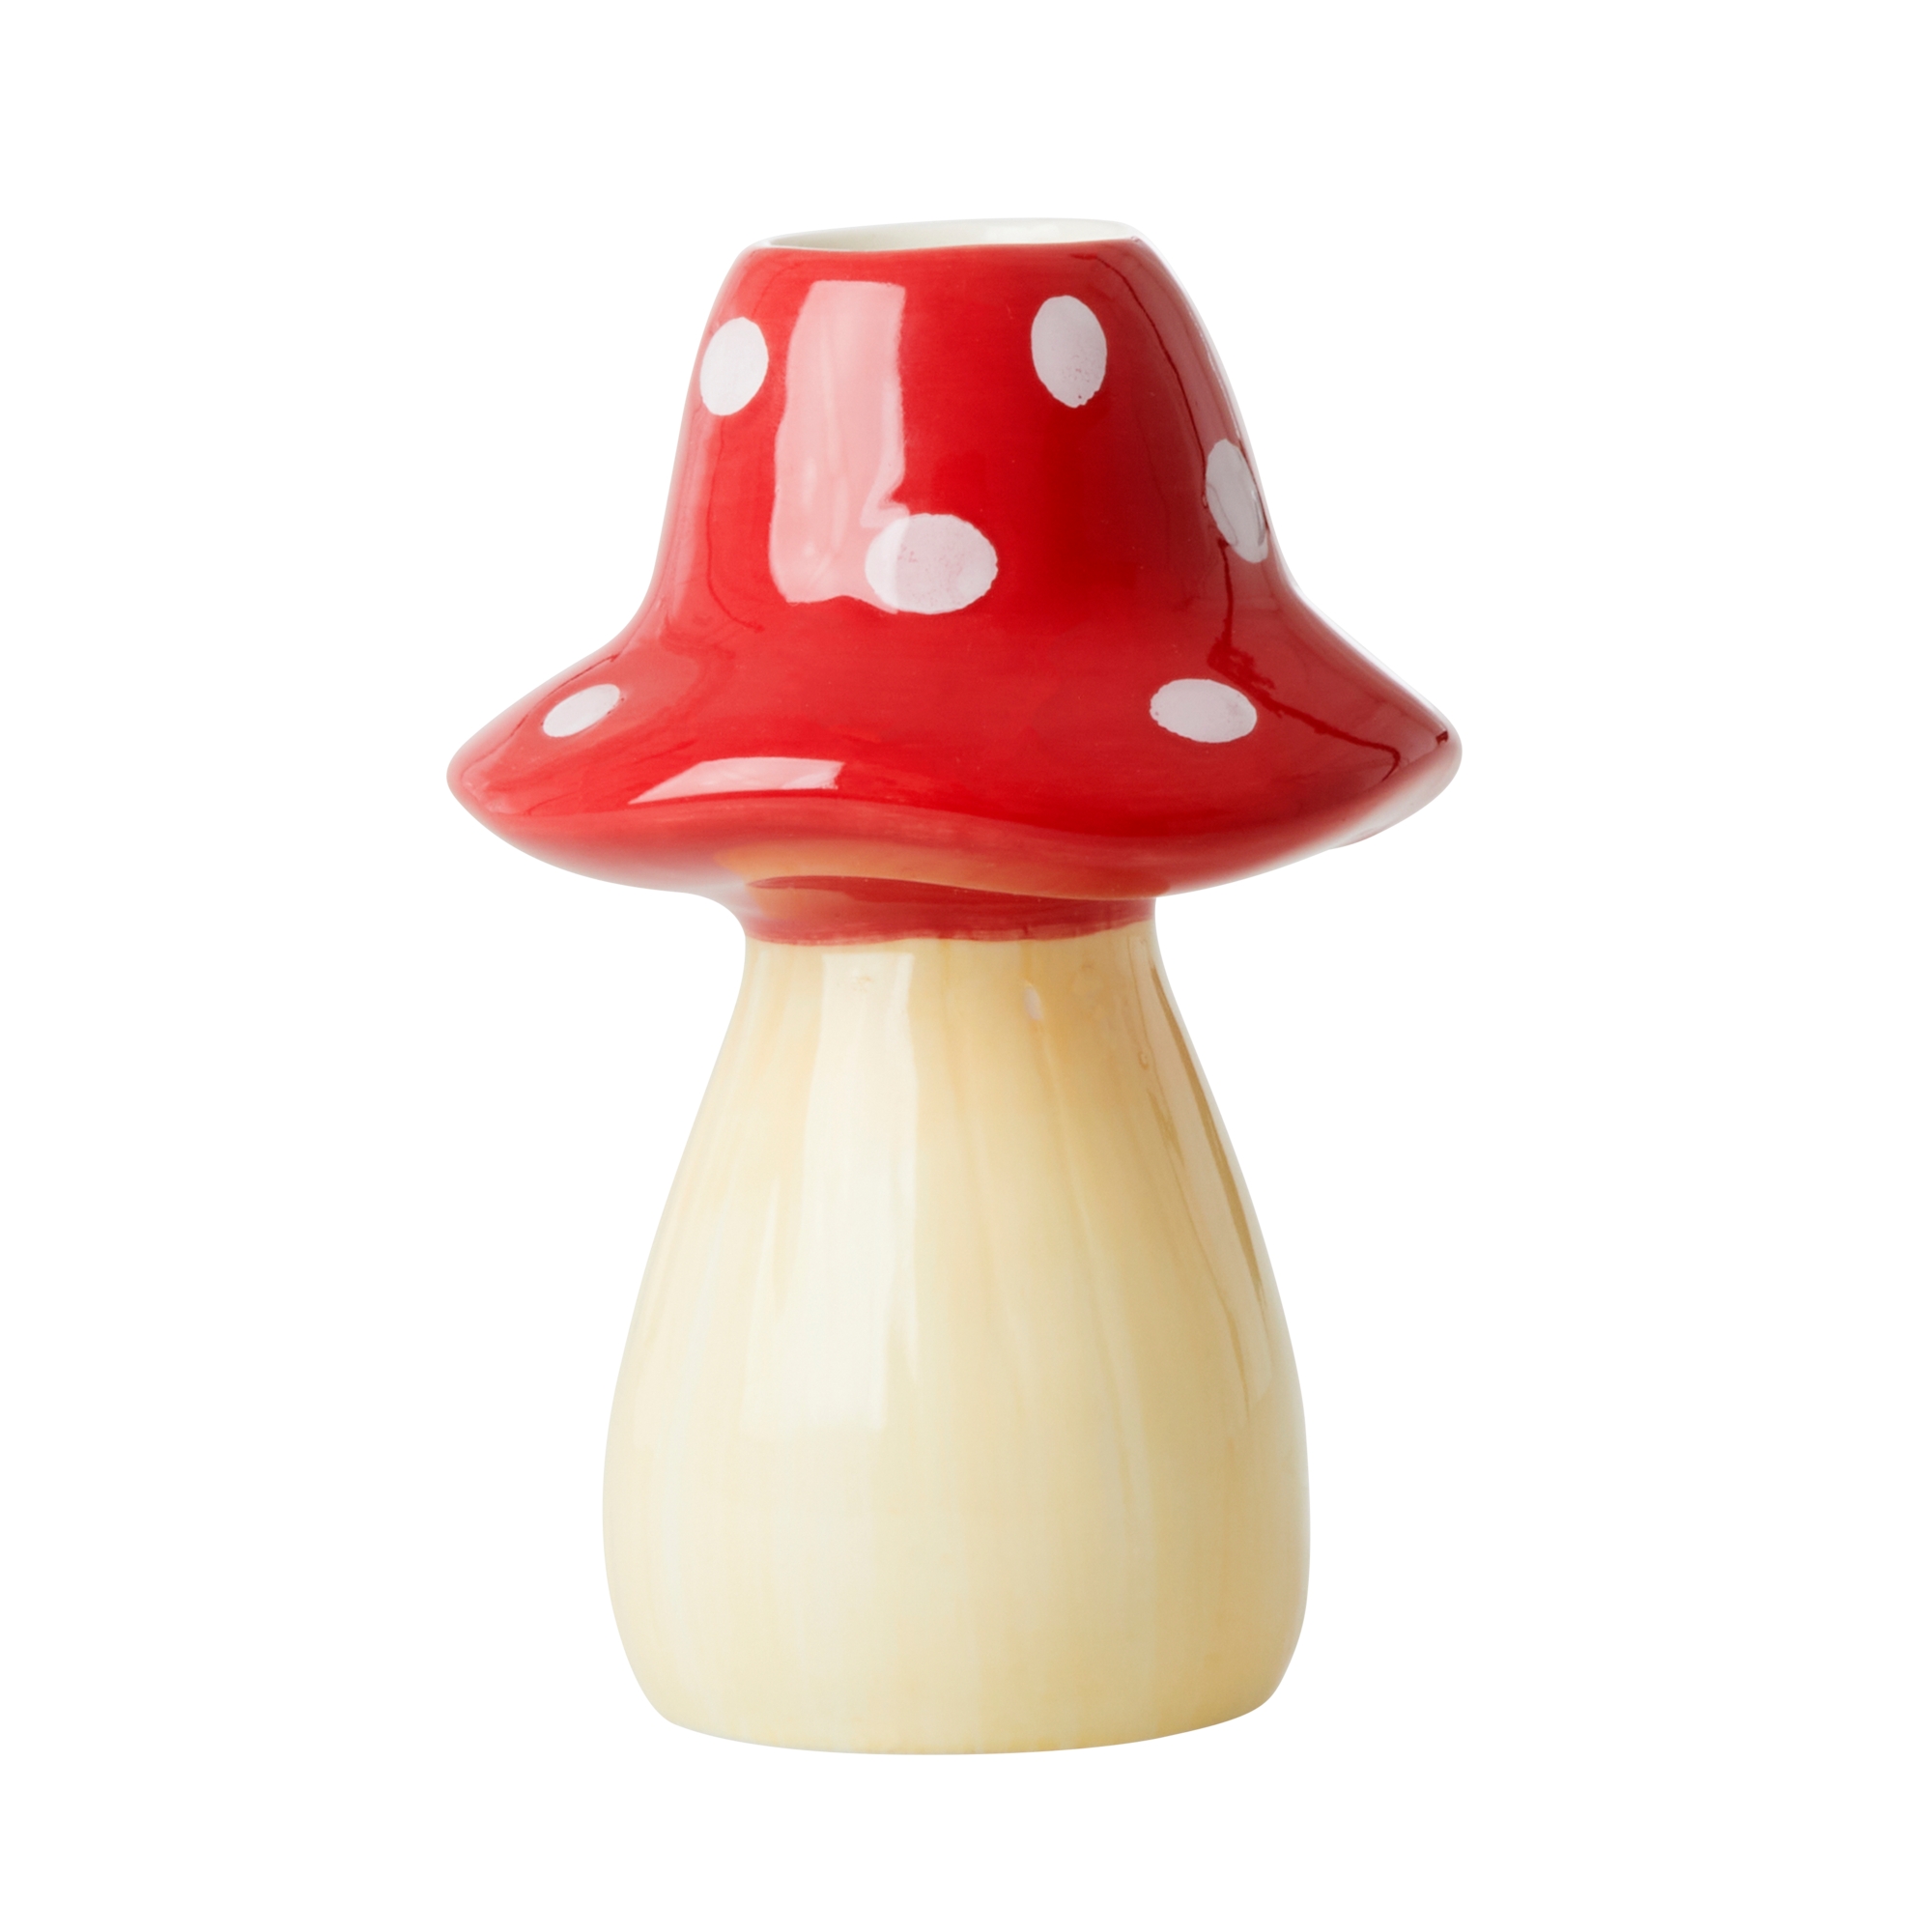 rice Ceramic Mushroom Candle Holder - Tall